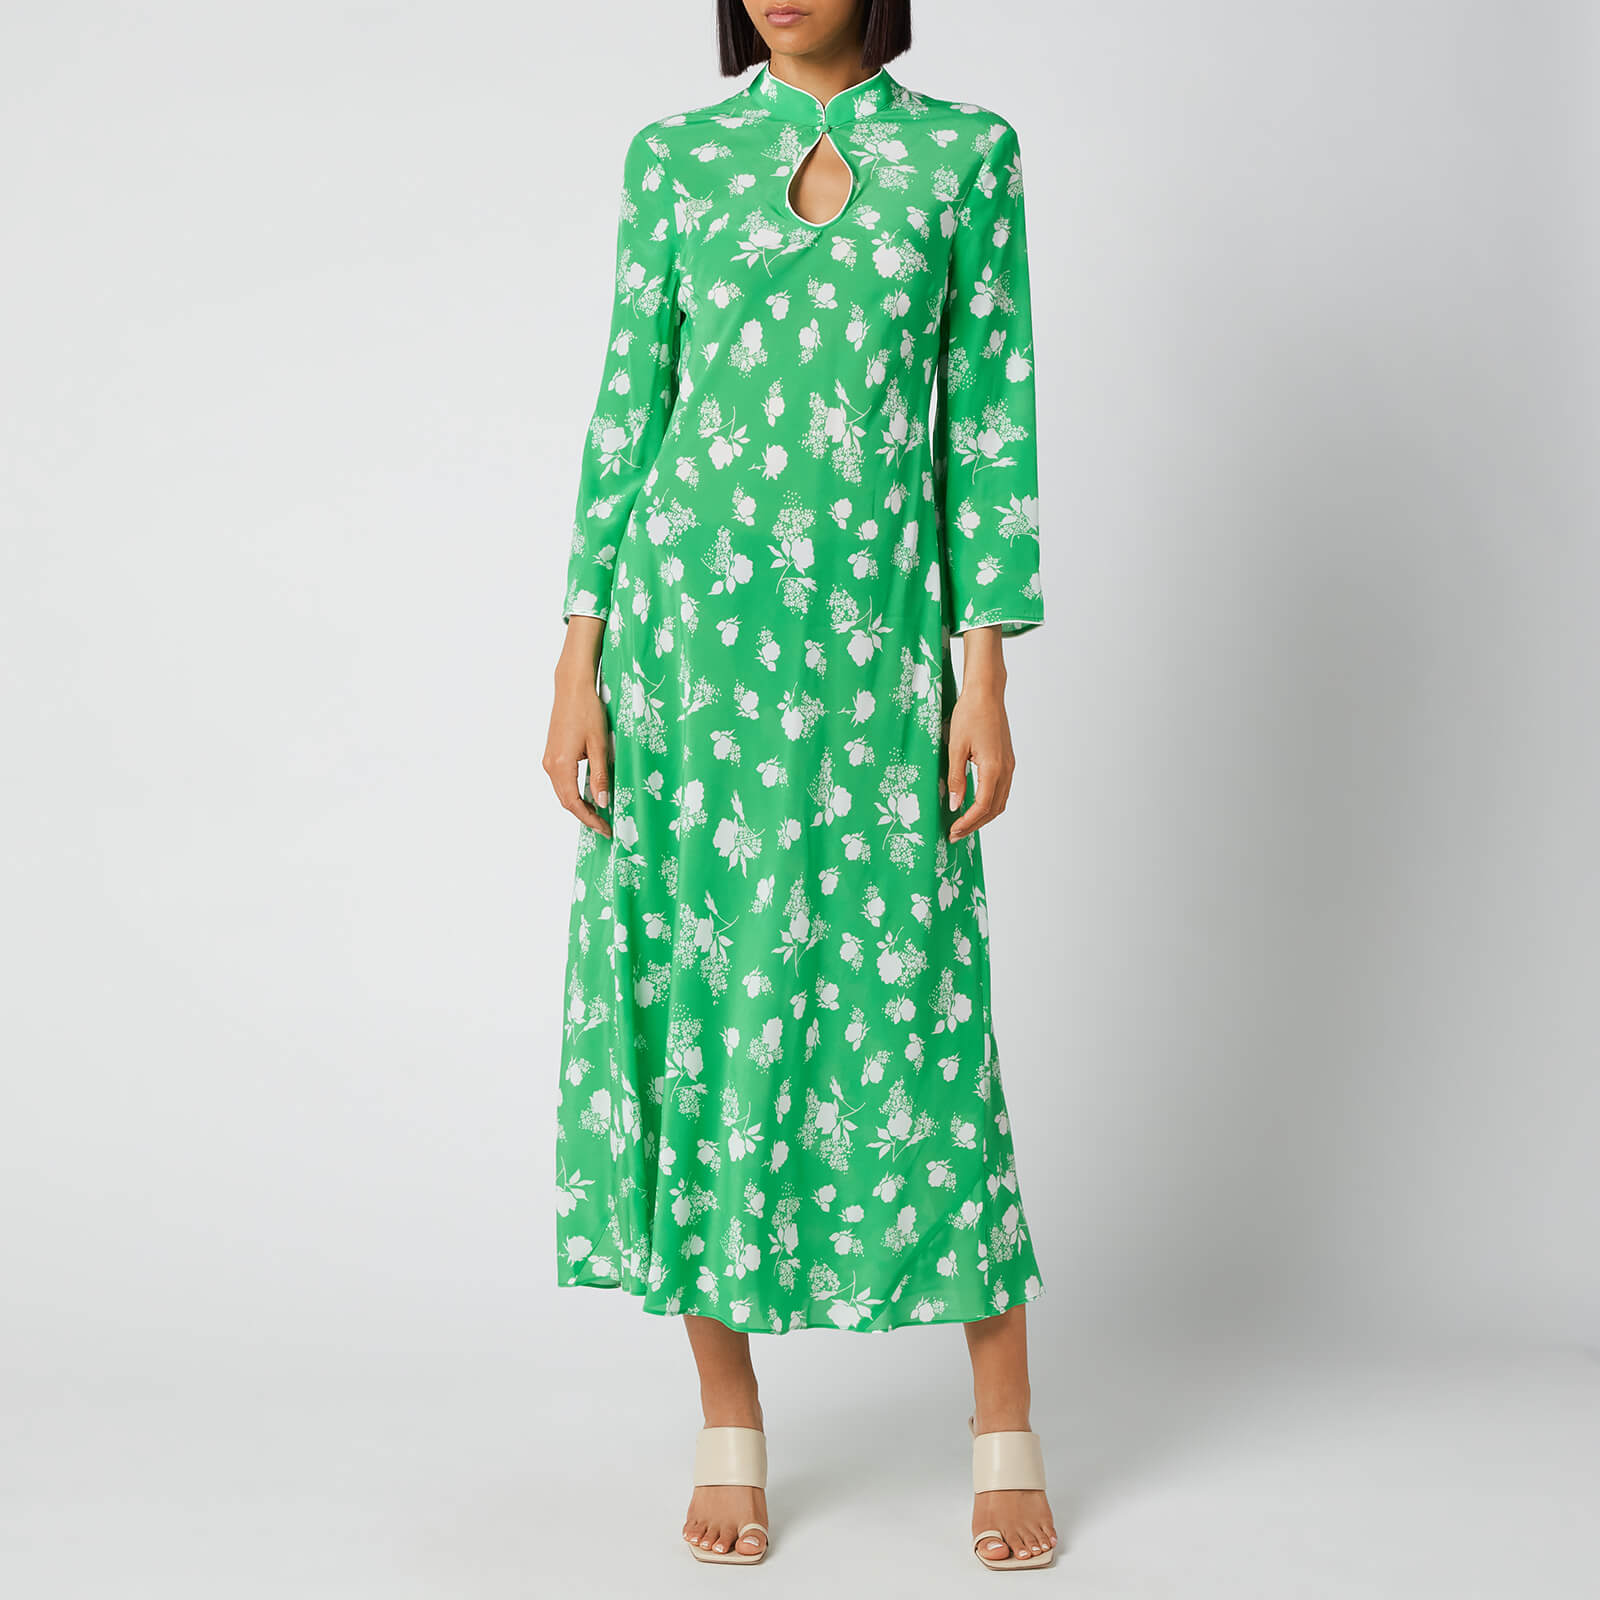 RIXO Women's Sophia Midi Dresses - Posey Bunch Floral Green Ivory - S